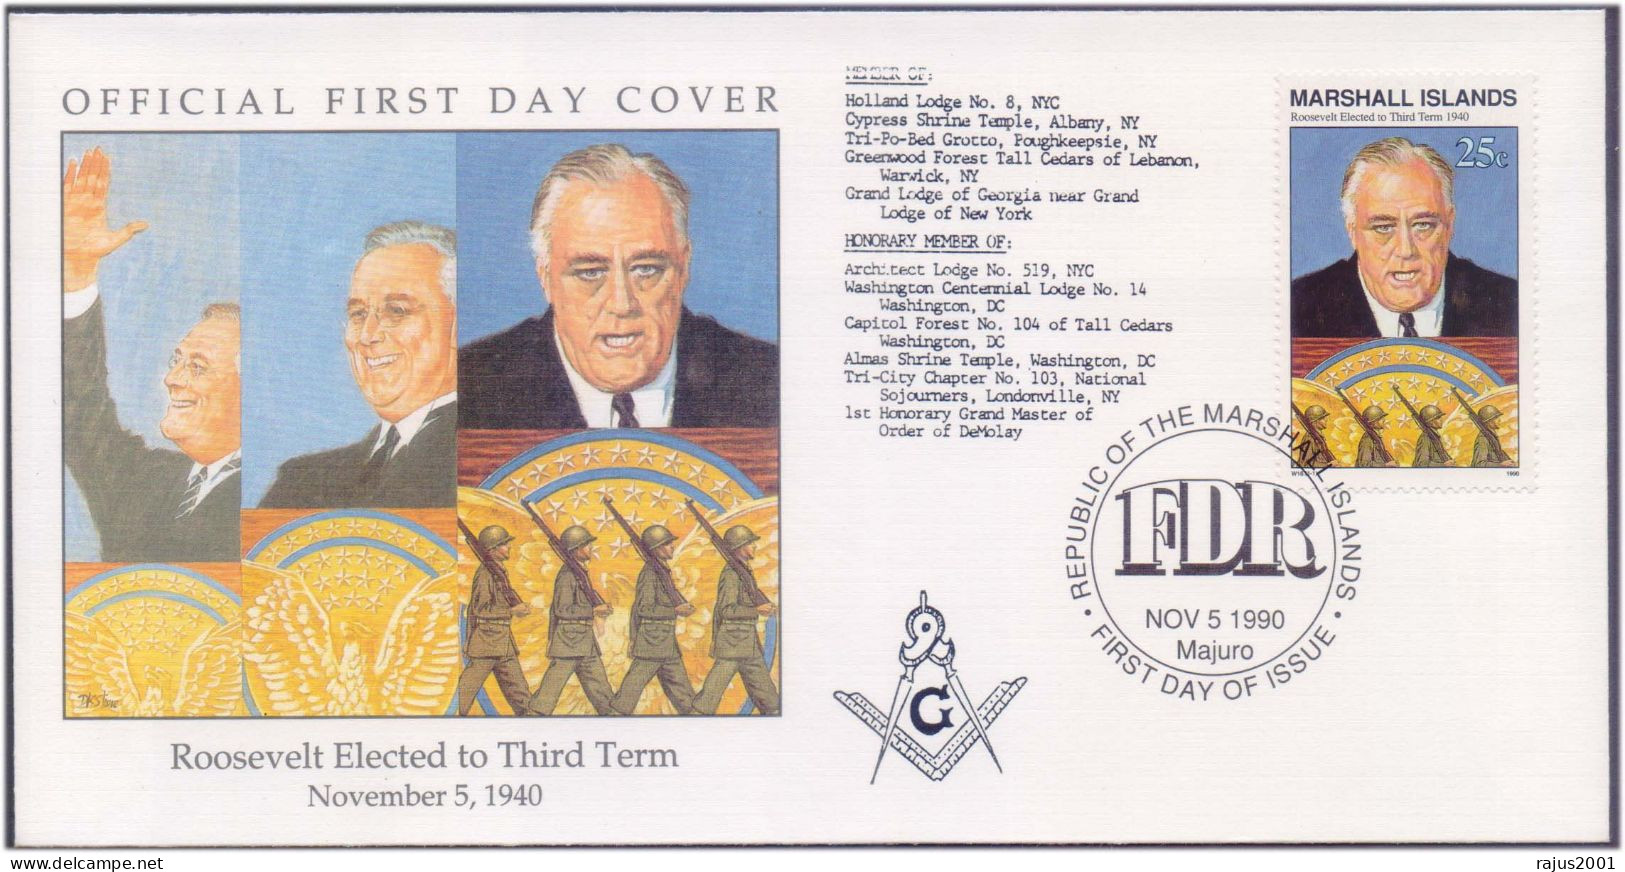 Franklin D Roosevelt 32nd US President, Holland Lodge No. 8 Architect Lodge No 519 Freemasonry Masonic Marshall FDC - Massoneria